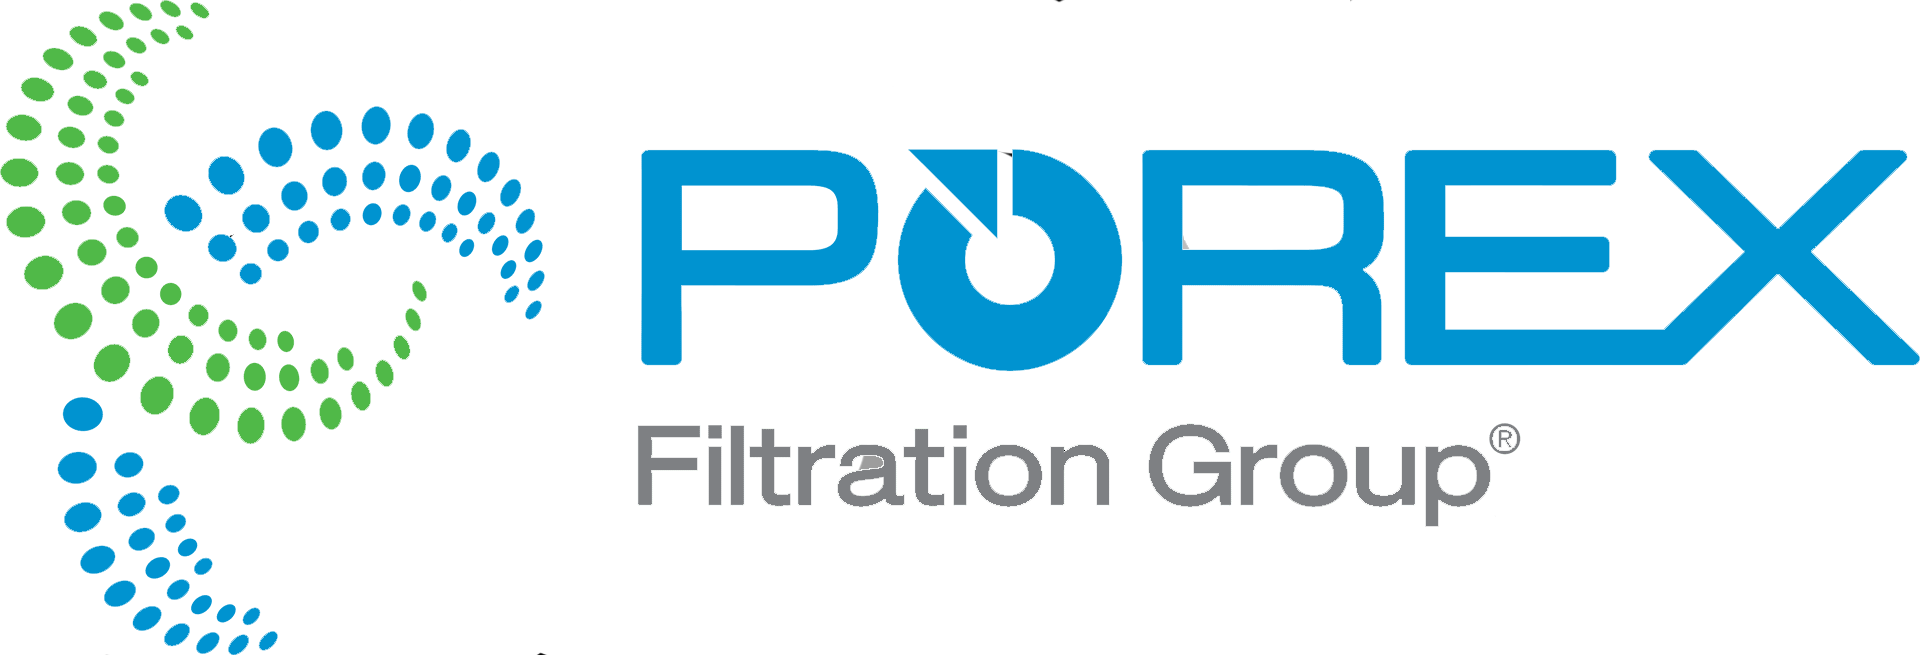 Porex Filtration